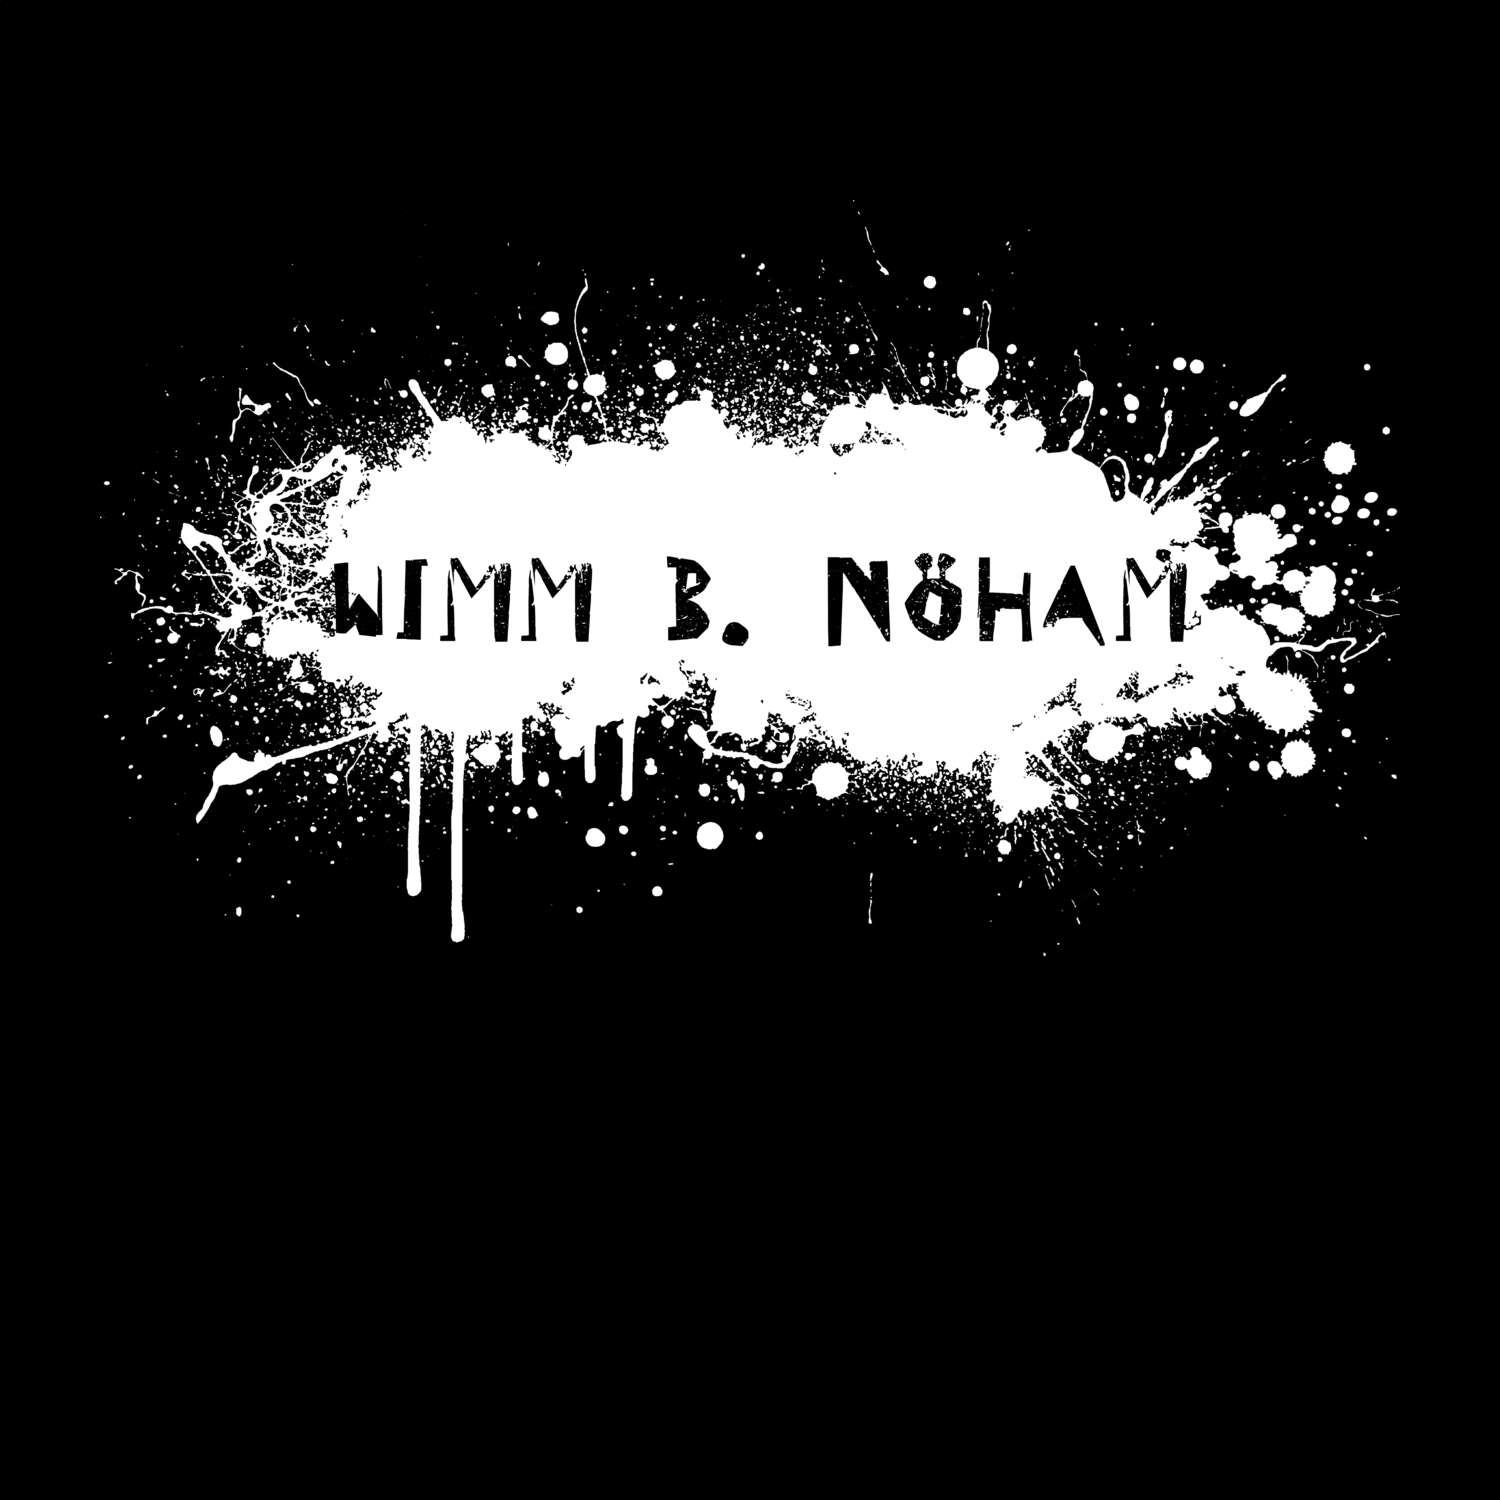 Wimm b. Nöham T-Shirt »Paint Splash Punk«